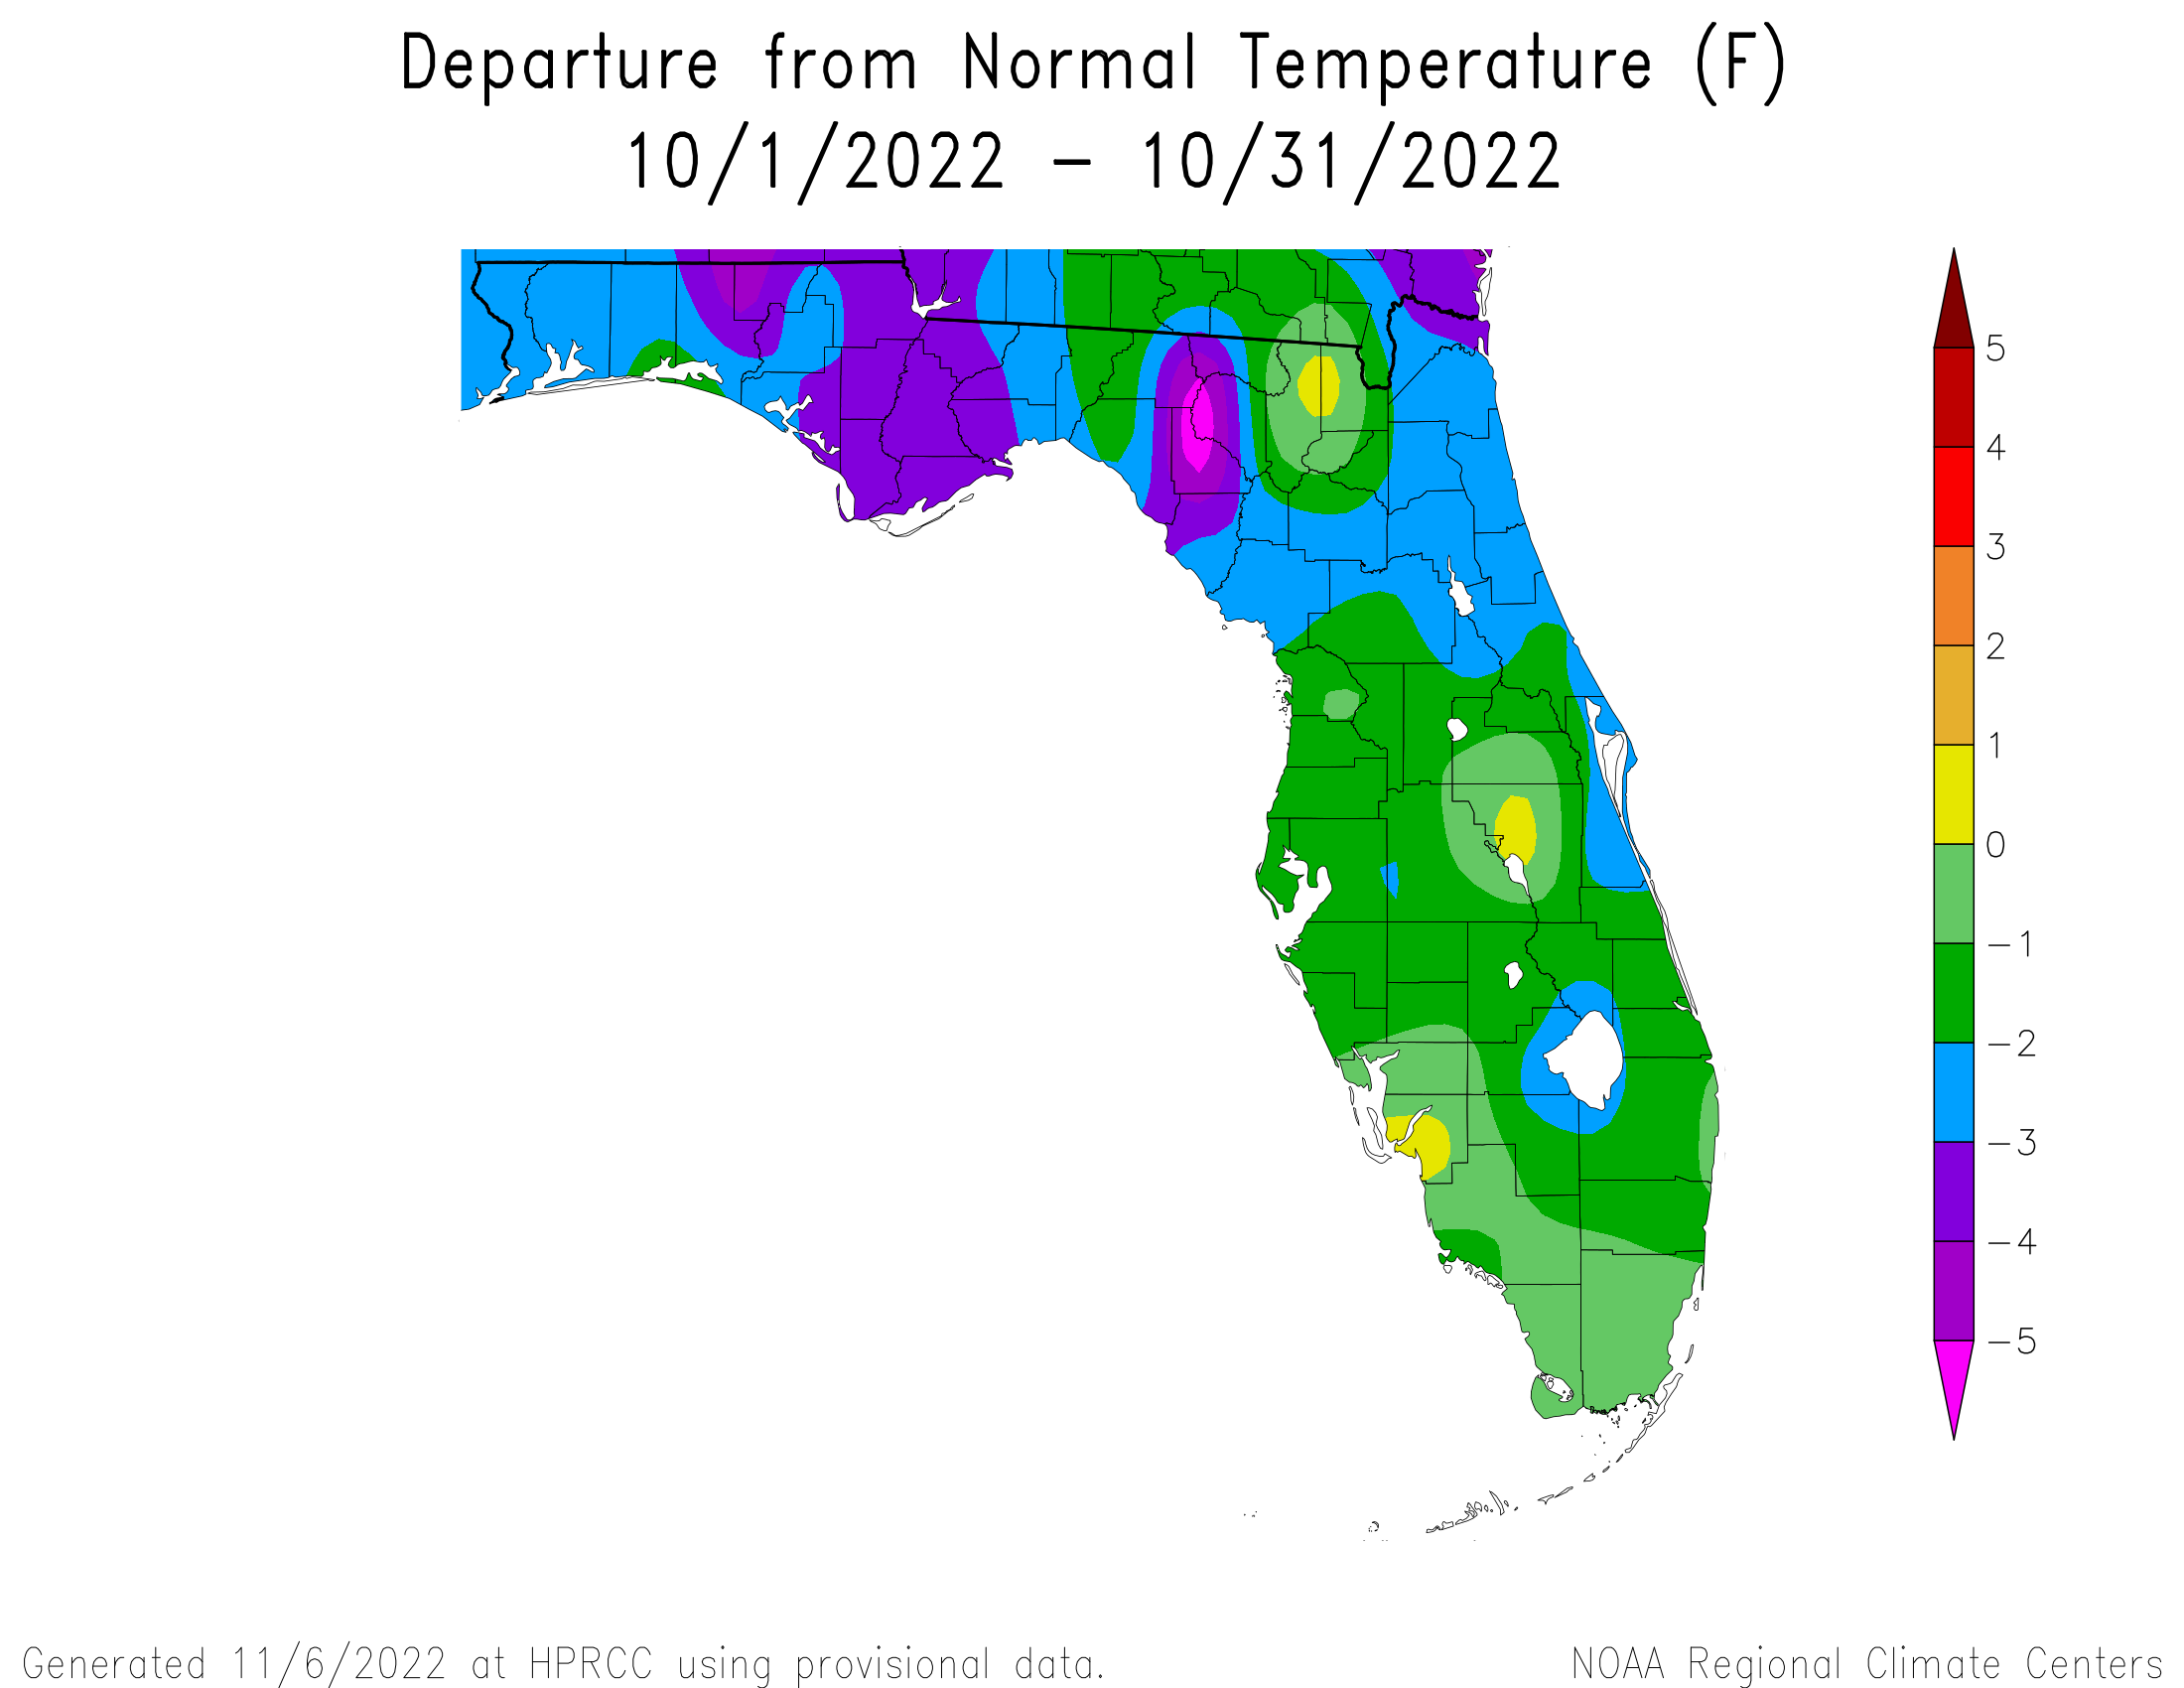 October 22 FL Departure from Normal Temperatures